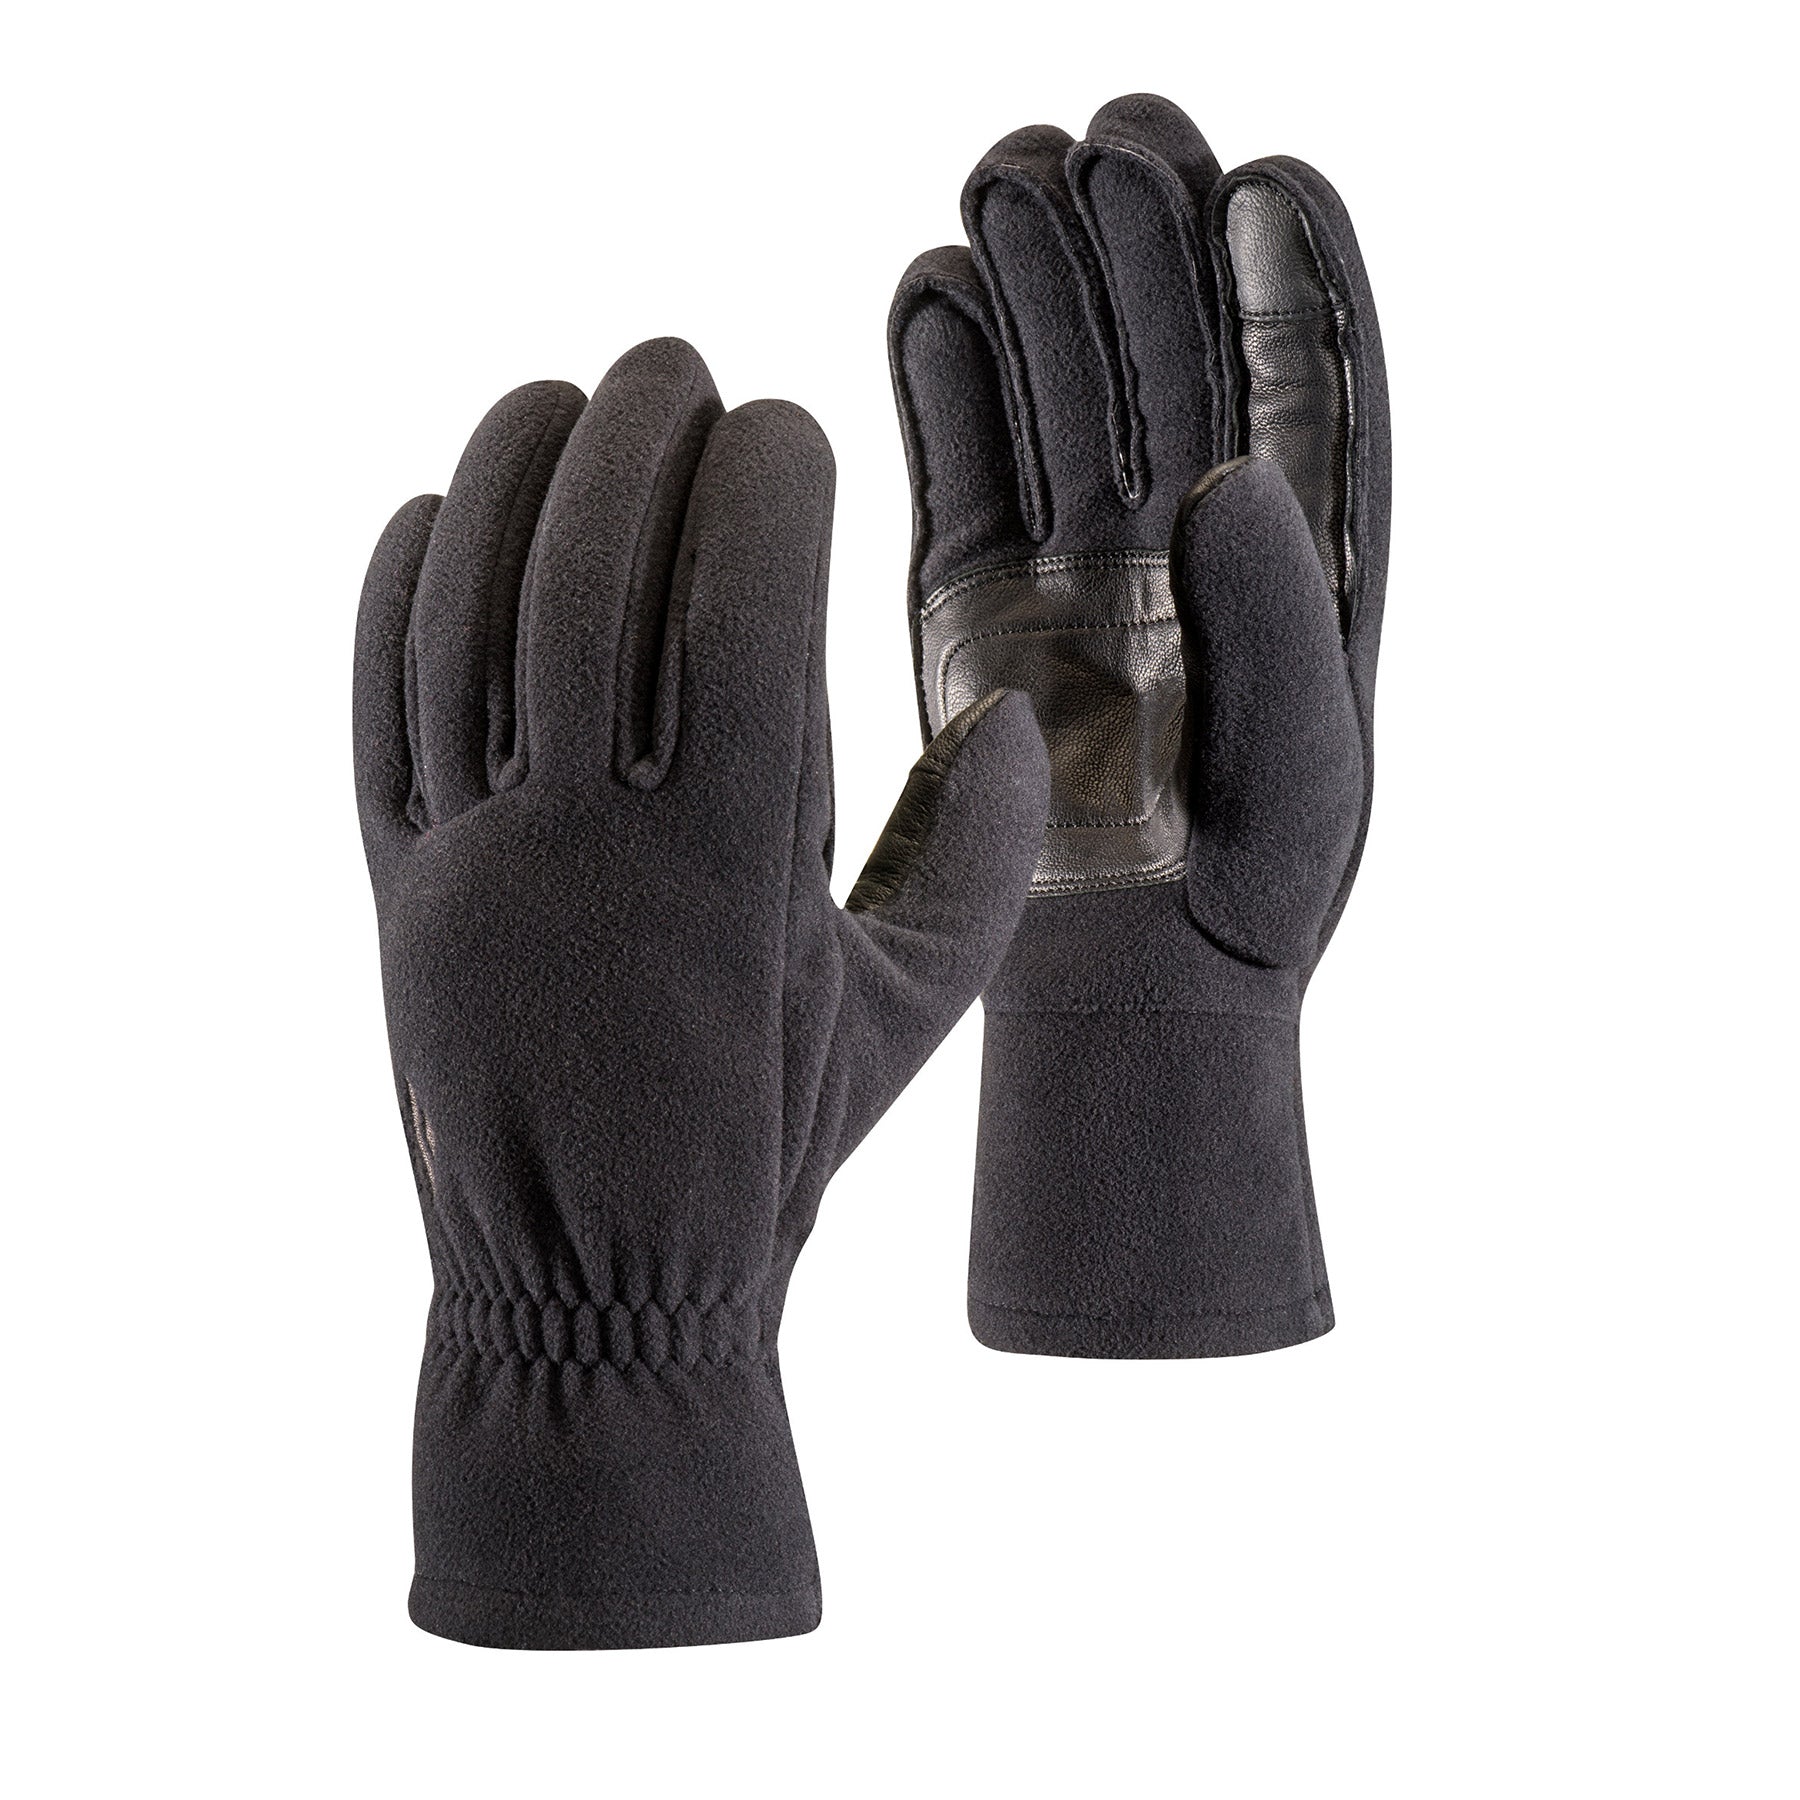 a pair of windproof fleece gloves